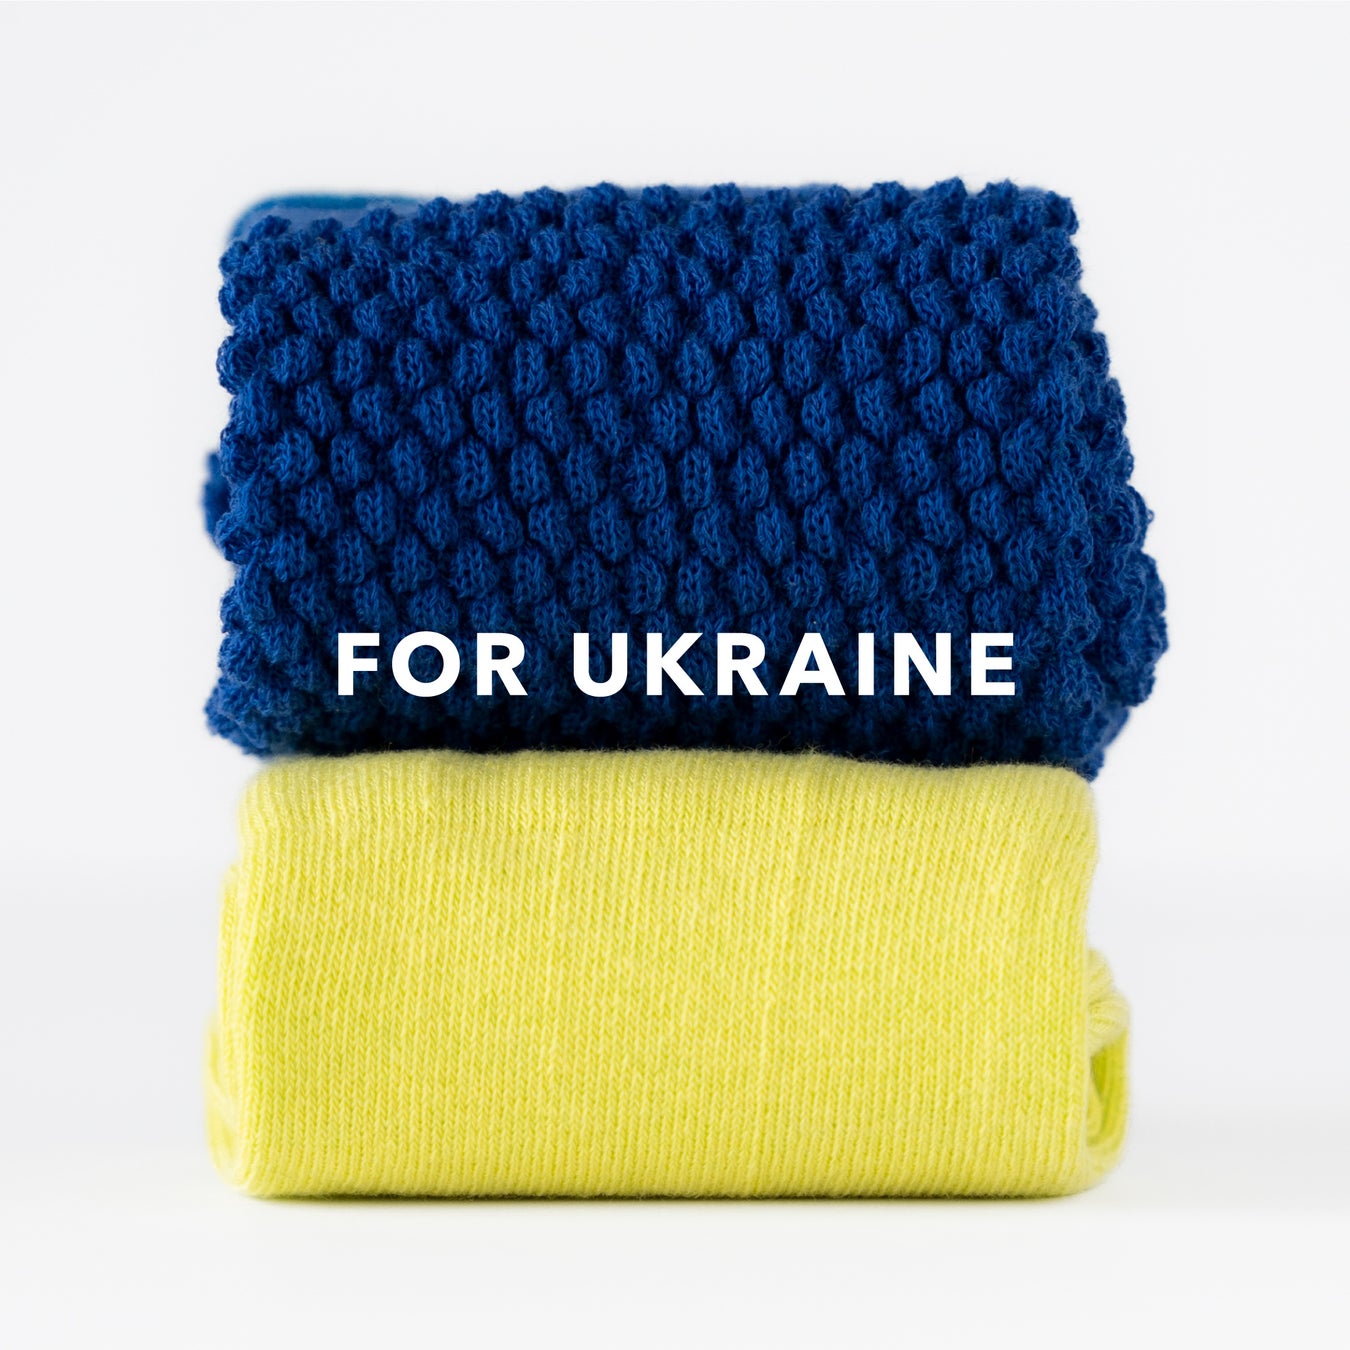 RELIEFWEARが【ウクライナ支援】のための靴下セット「FOR UKRAINE / KAIHŌ SOCKS SET」を販売